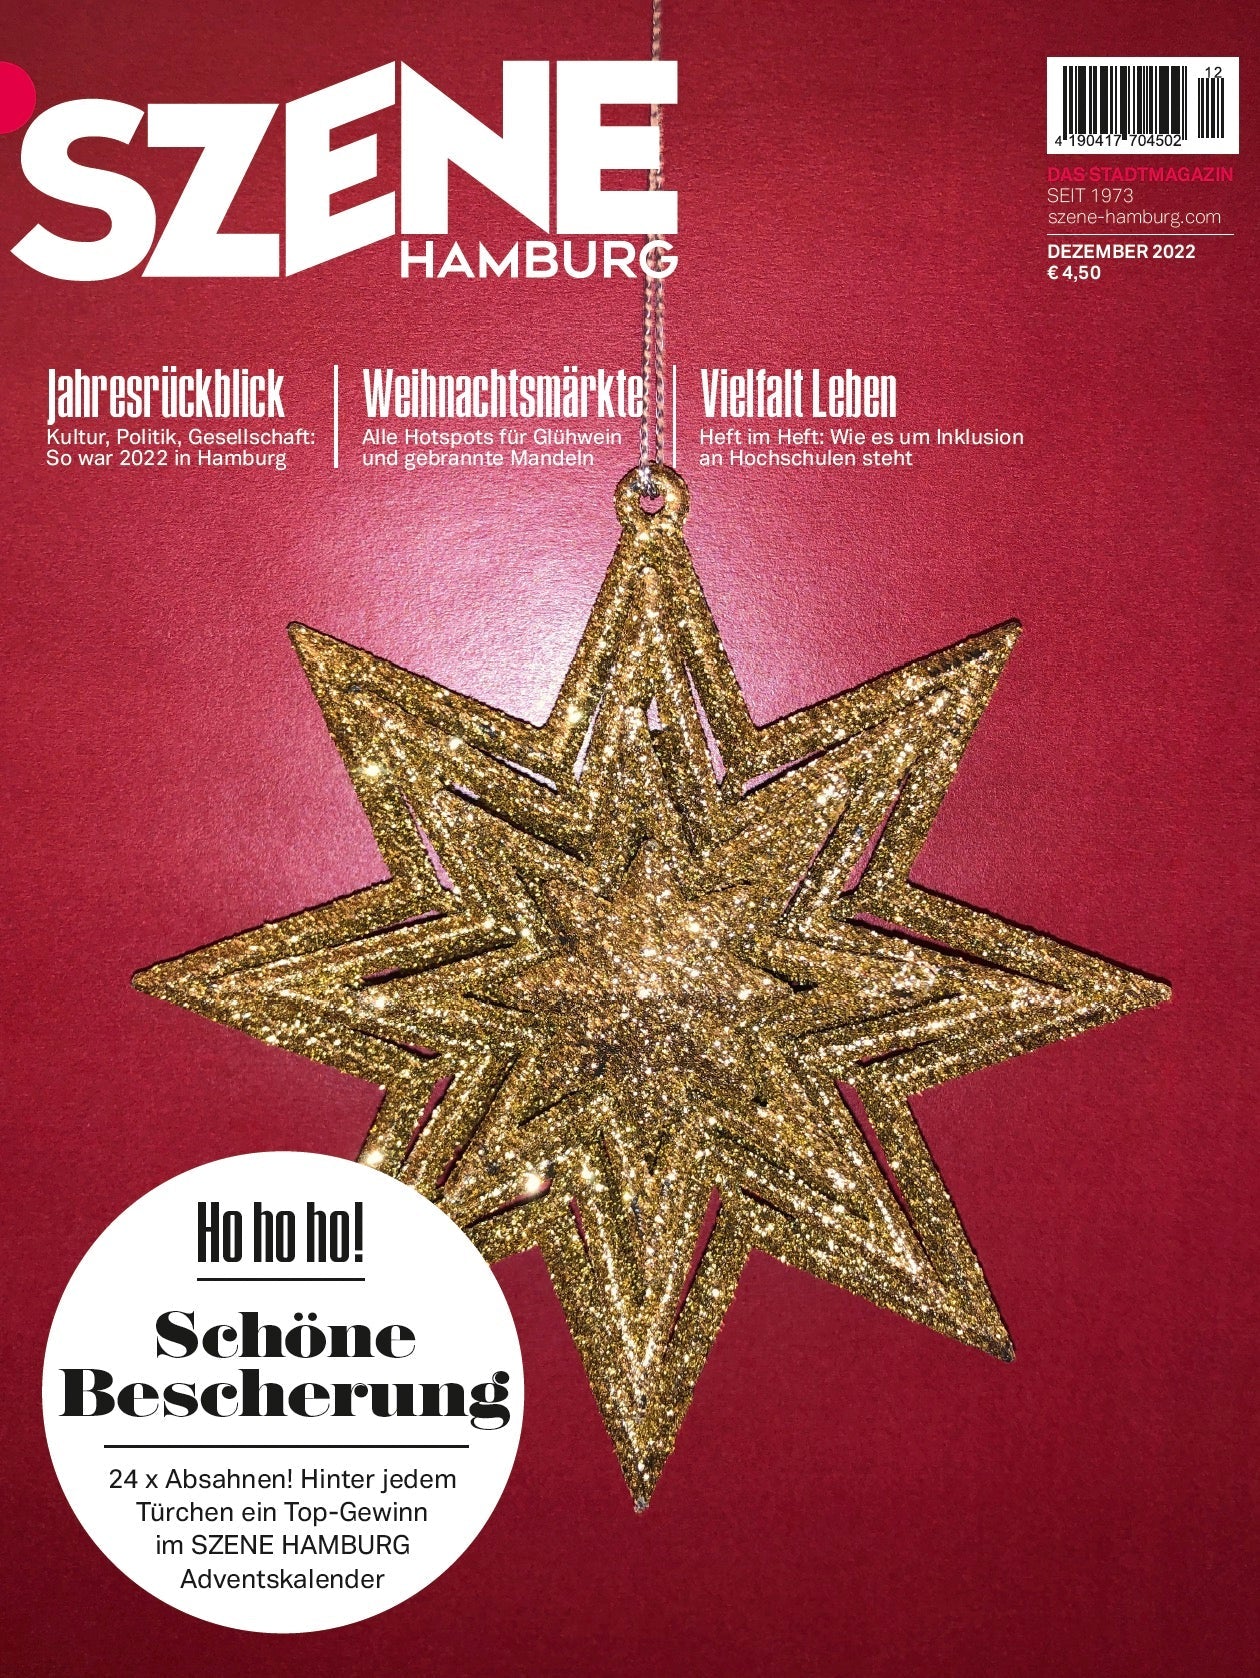 SZENE HAMBURG 12/2022 „Hamburger Jahresrückblick“ - SZENE HAMBURG Shop